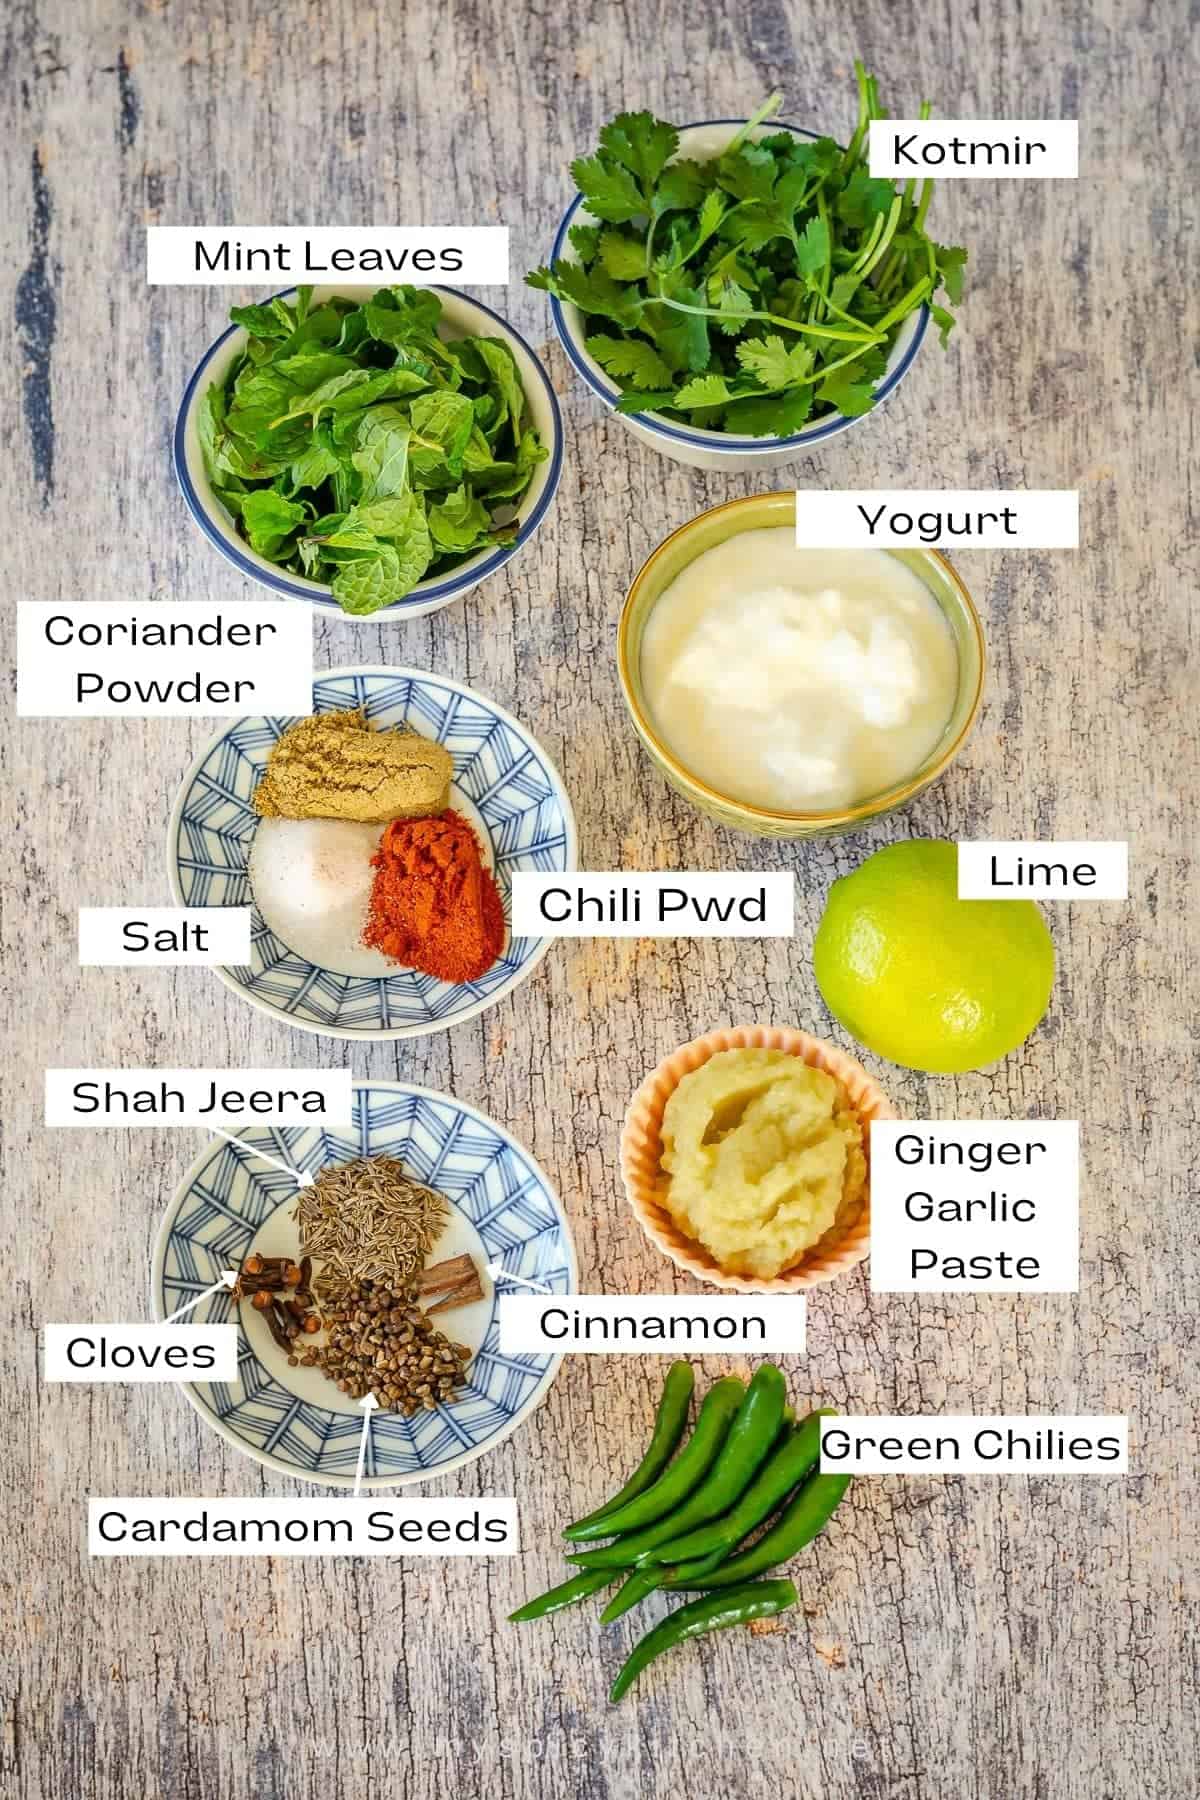 Ingredients for dum biryani marinade.